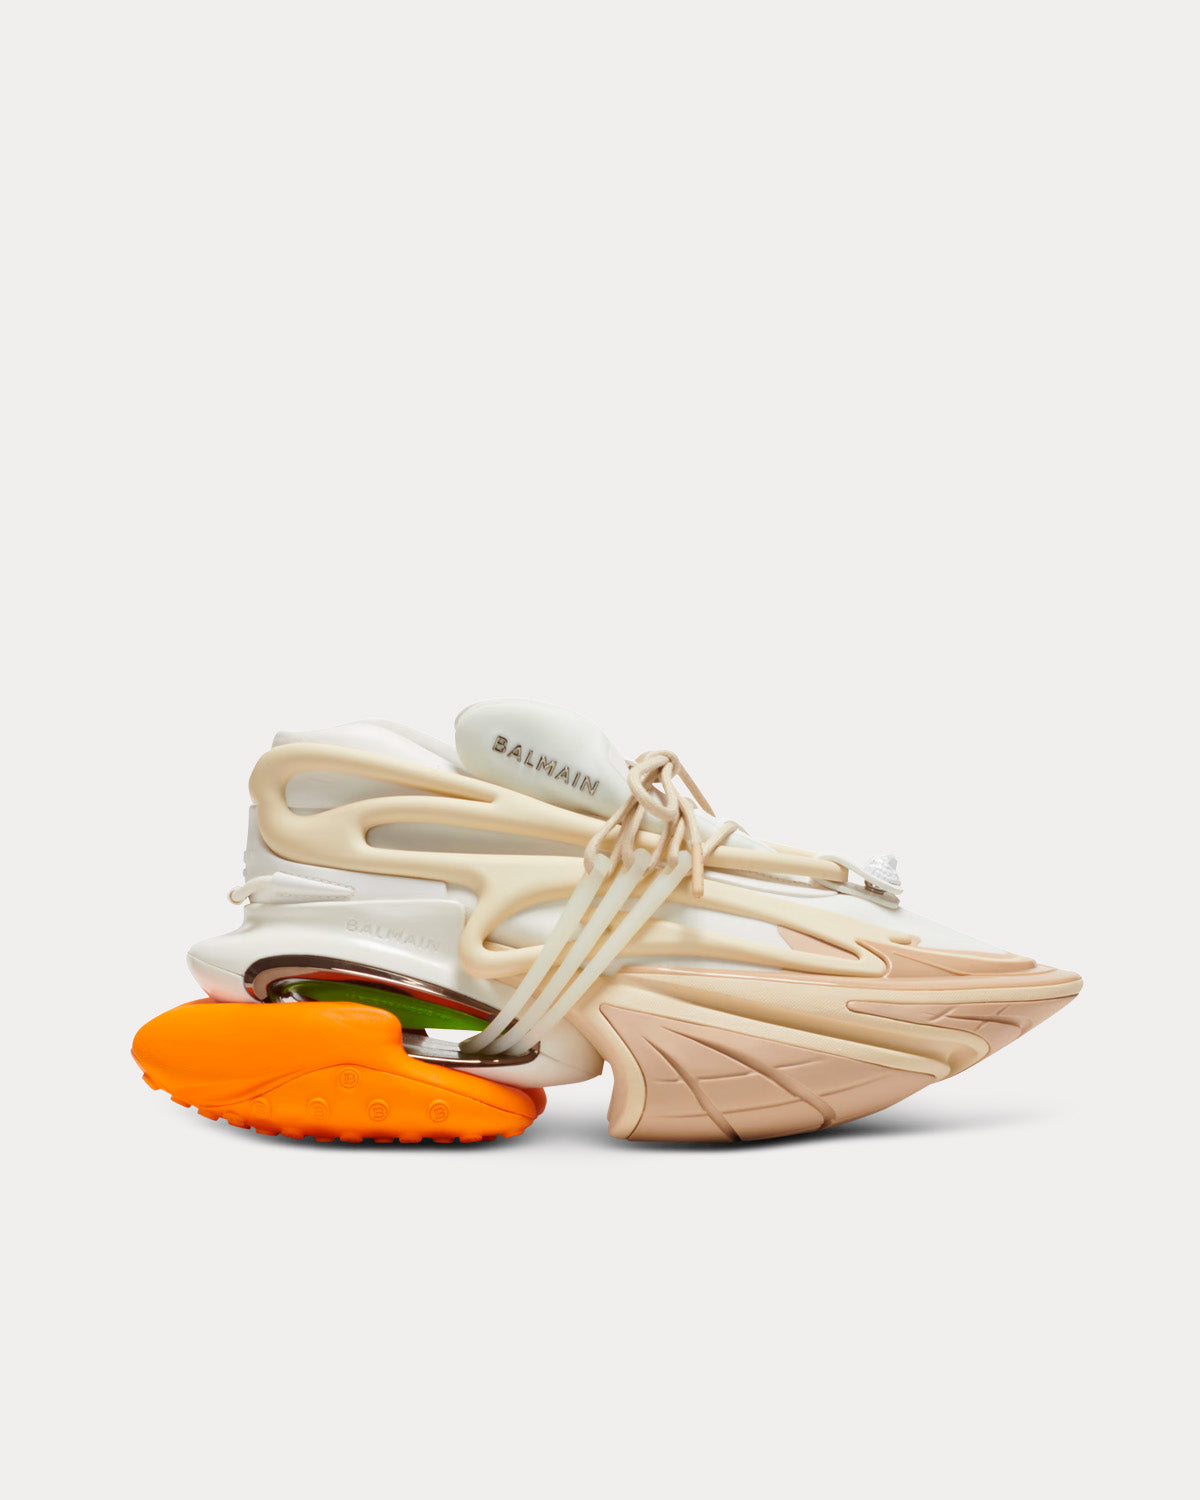 Balmain - Unicorn Neoprene & Leather Orange / Beige Low Top Sneakers